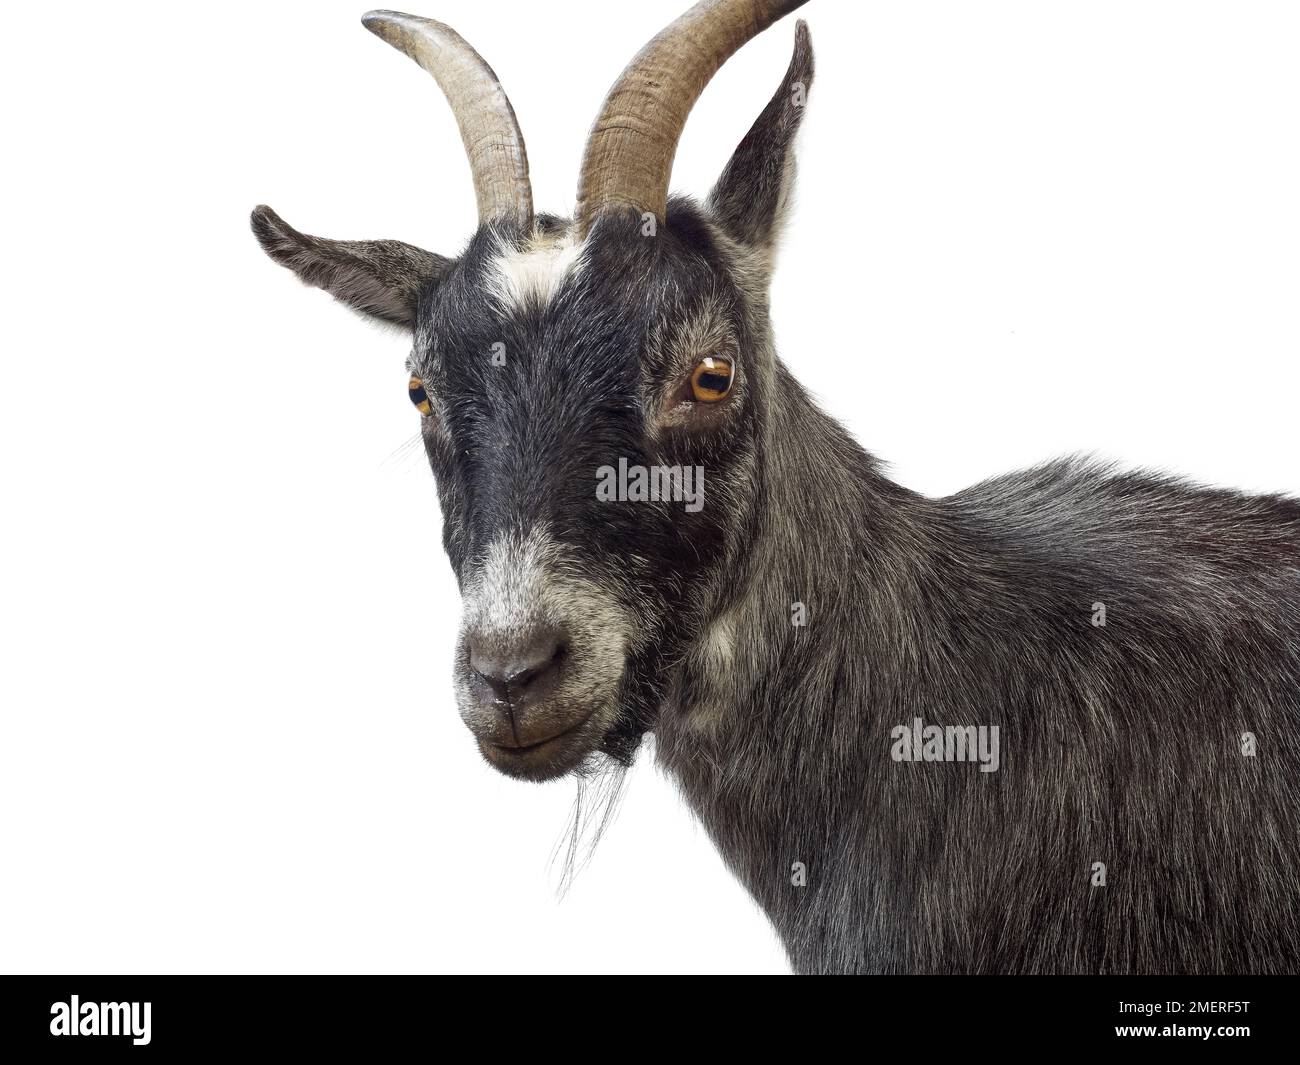 Pygmy goat Stock Photo